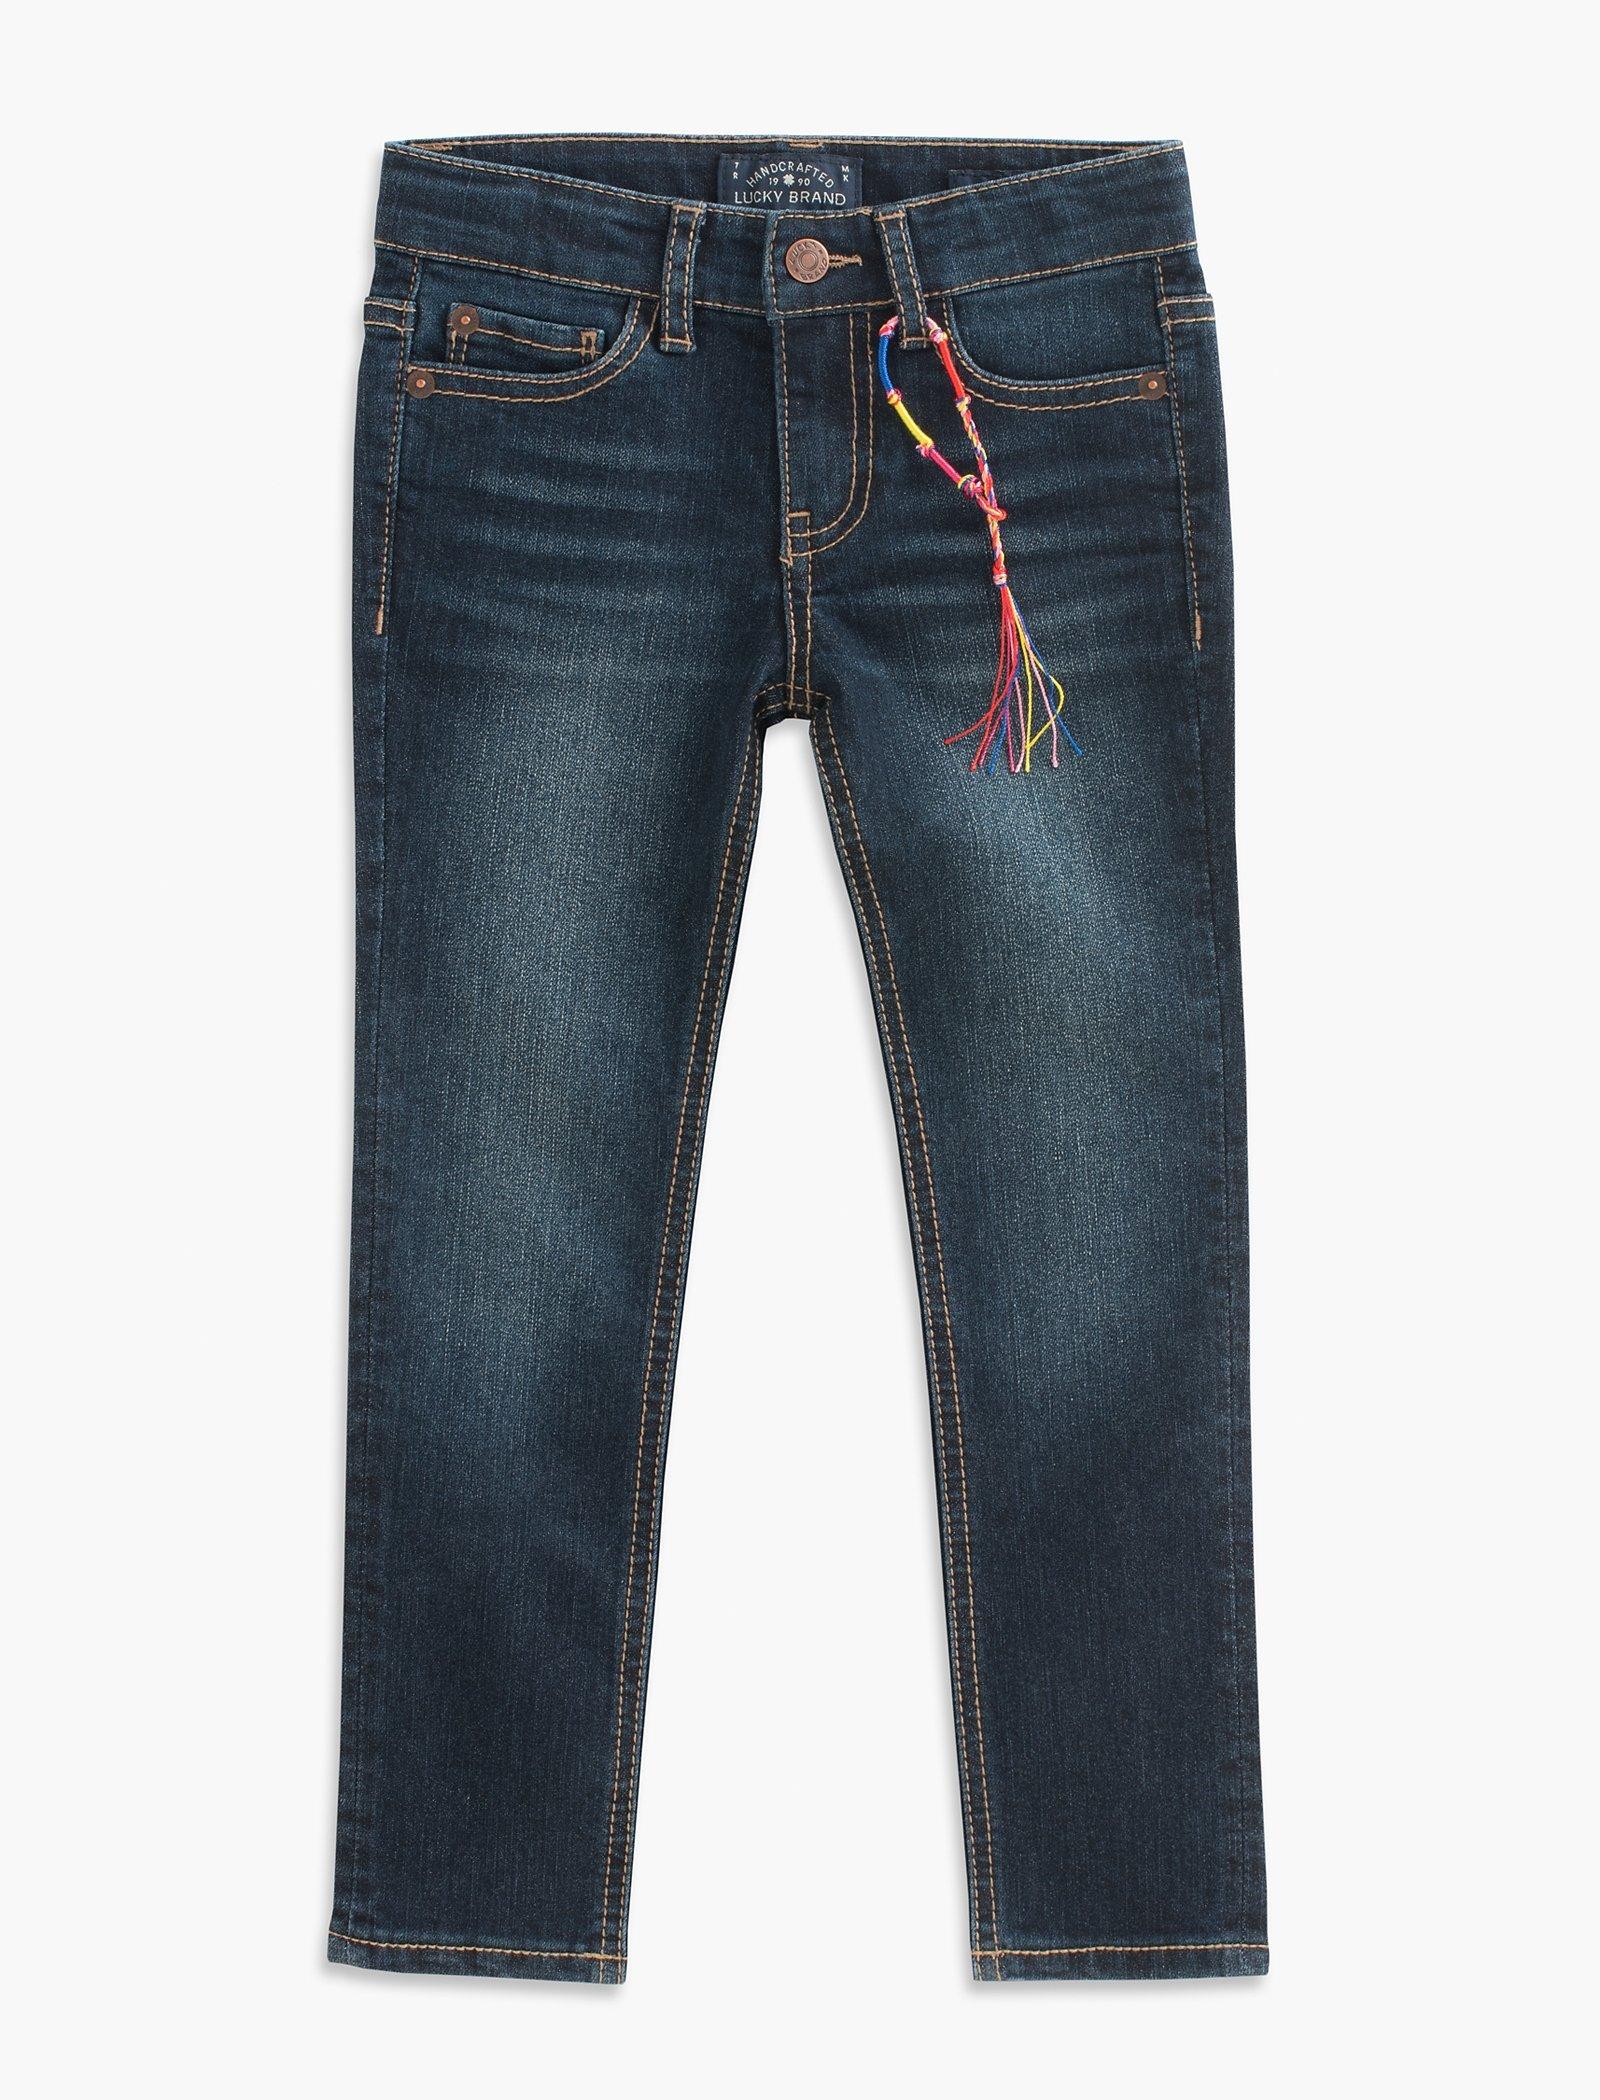 mother jeans online